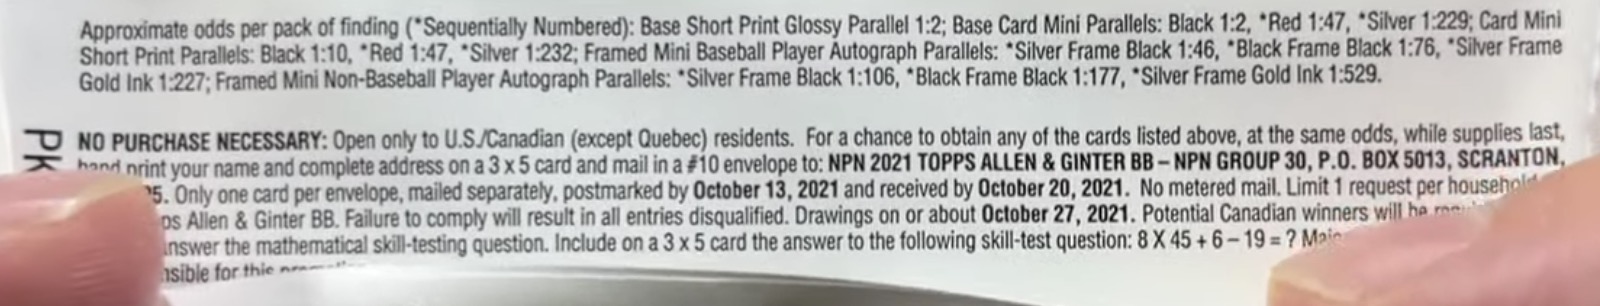 2021 Topps Allen & Ginter X Baseball - Hobby Box - No Purchase Necessary (NPN) Information